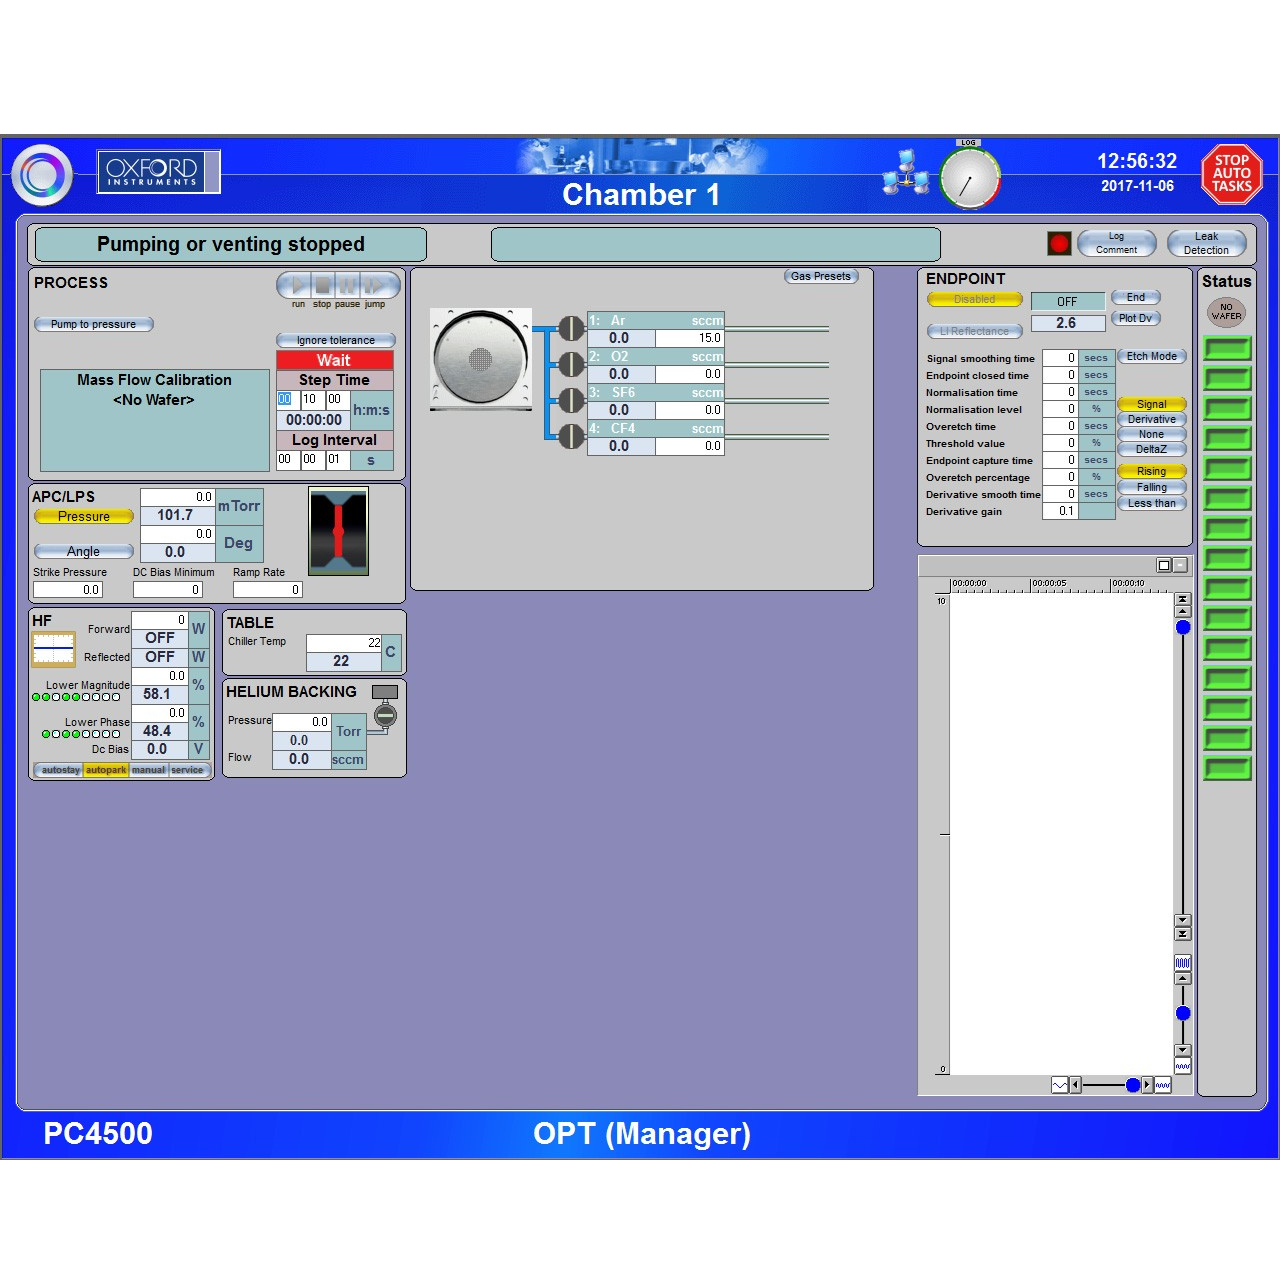 PC4500 process page